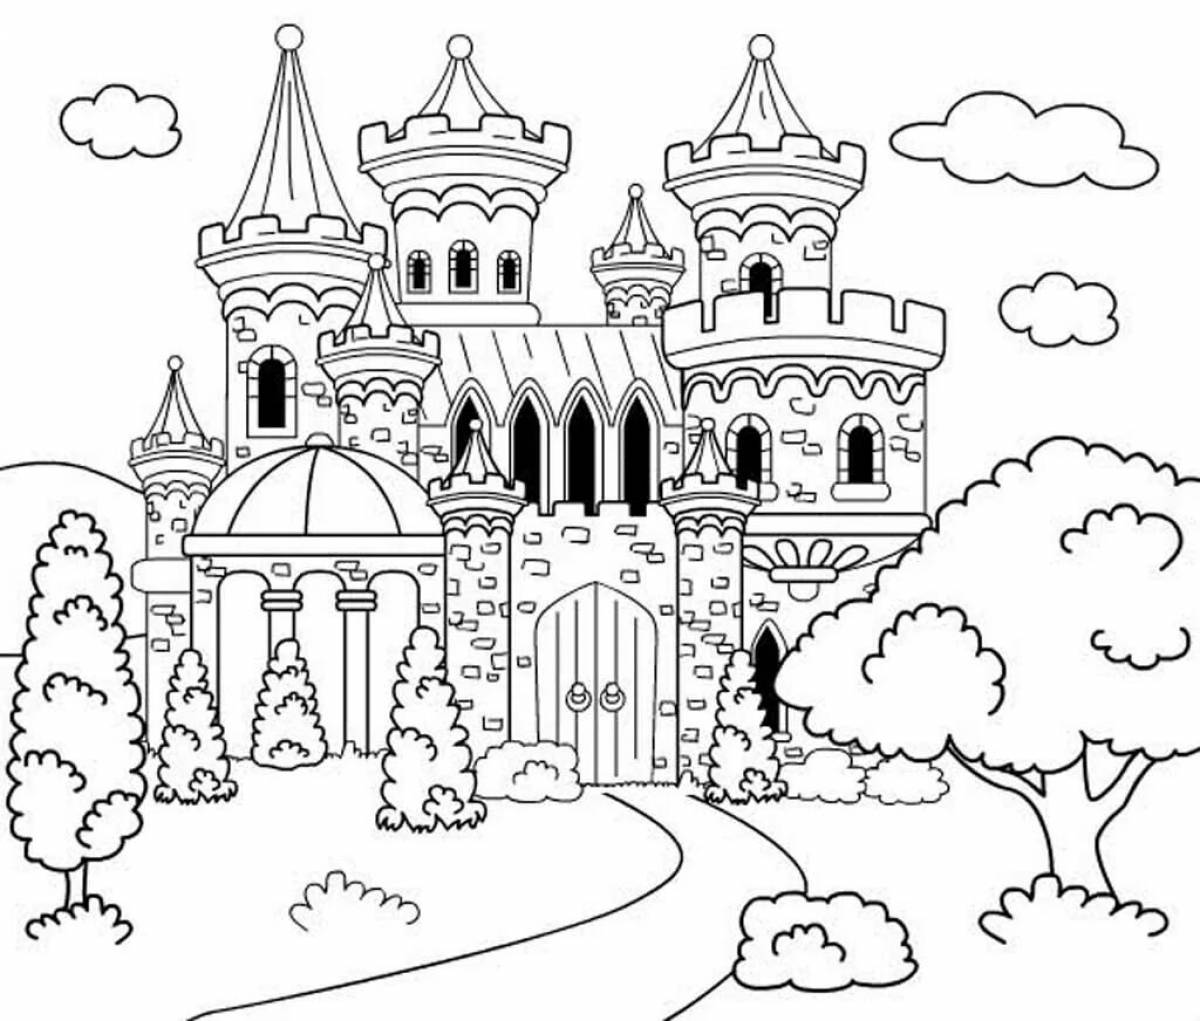 Fantastic castle coloring book